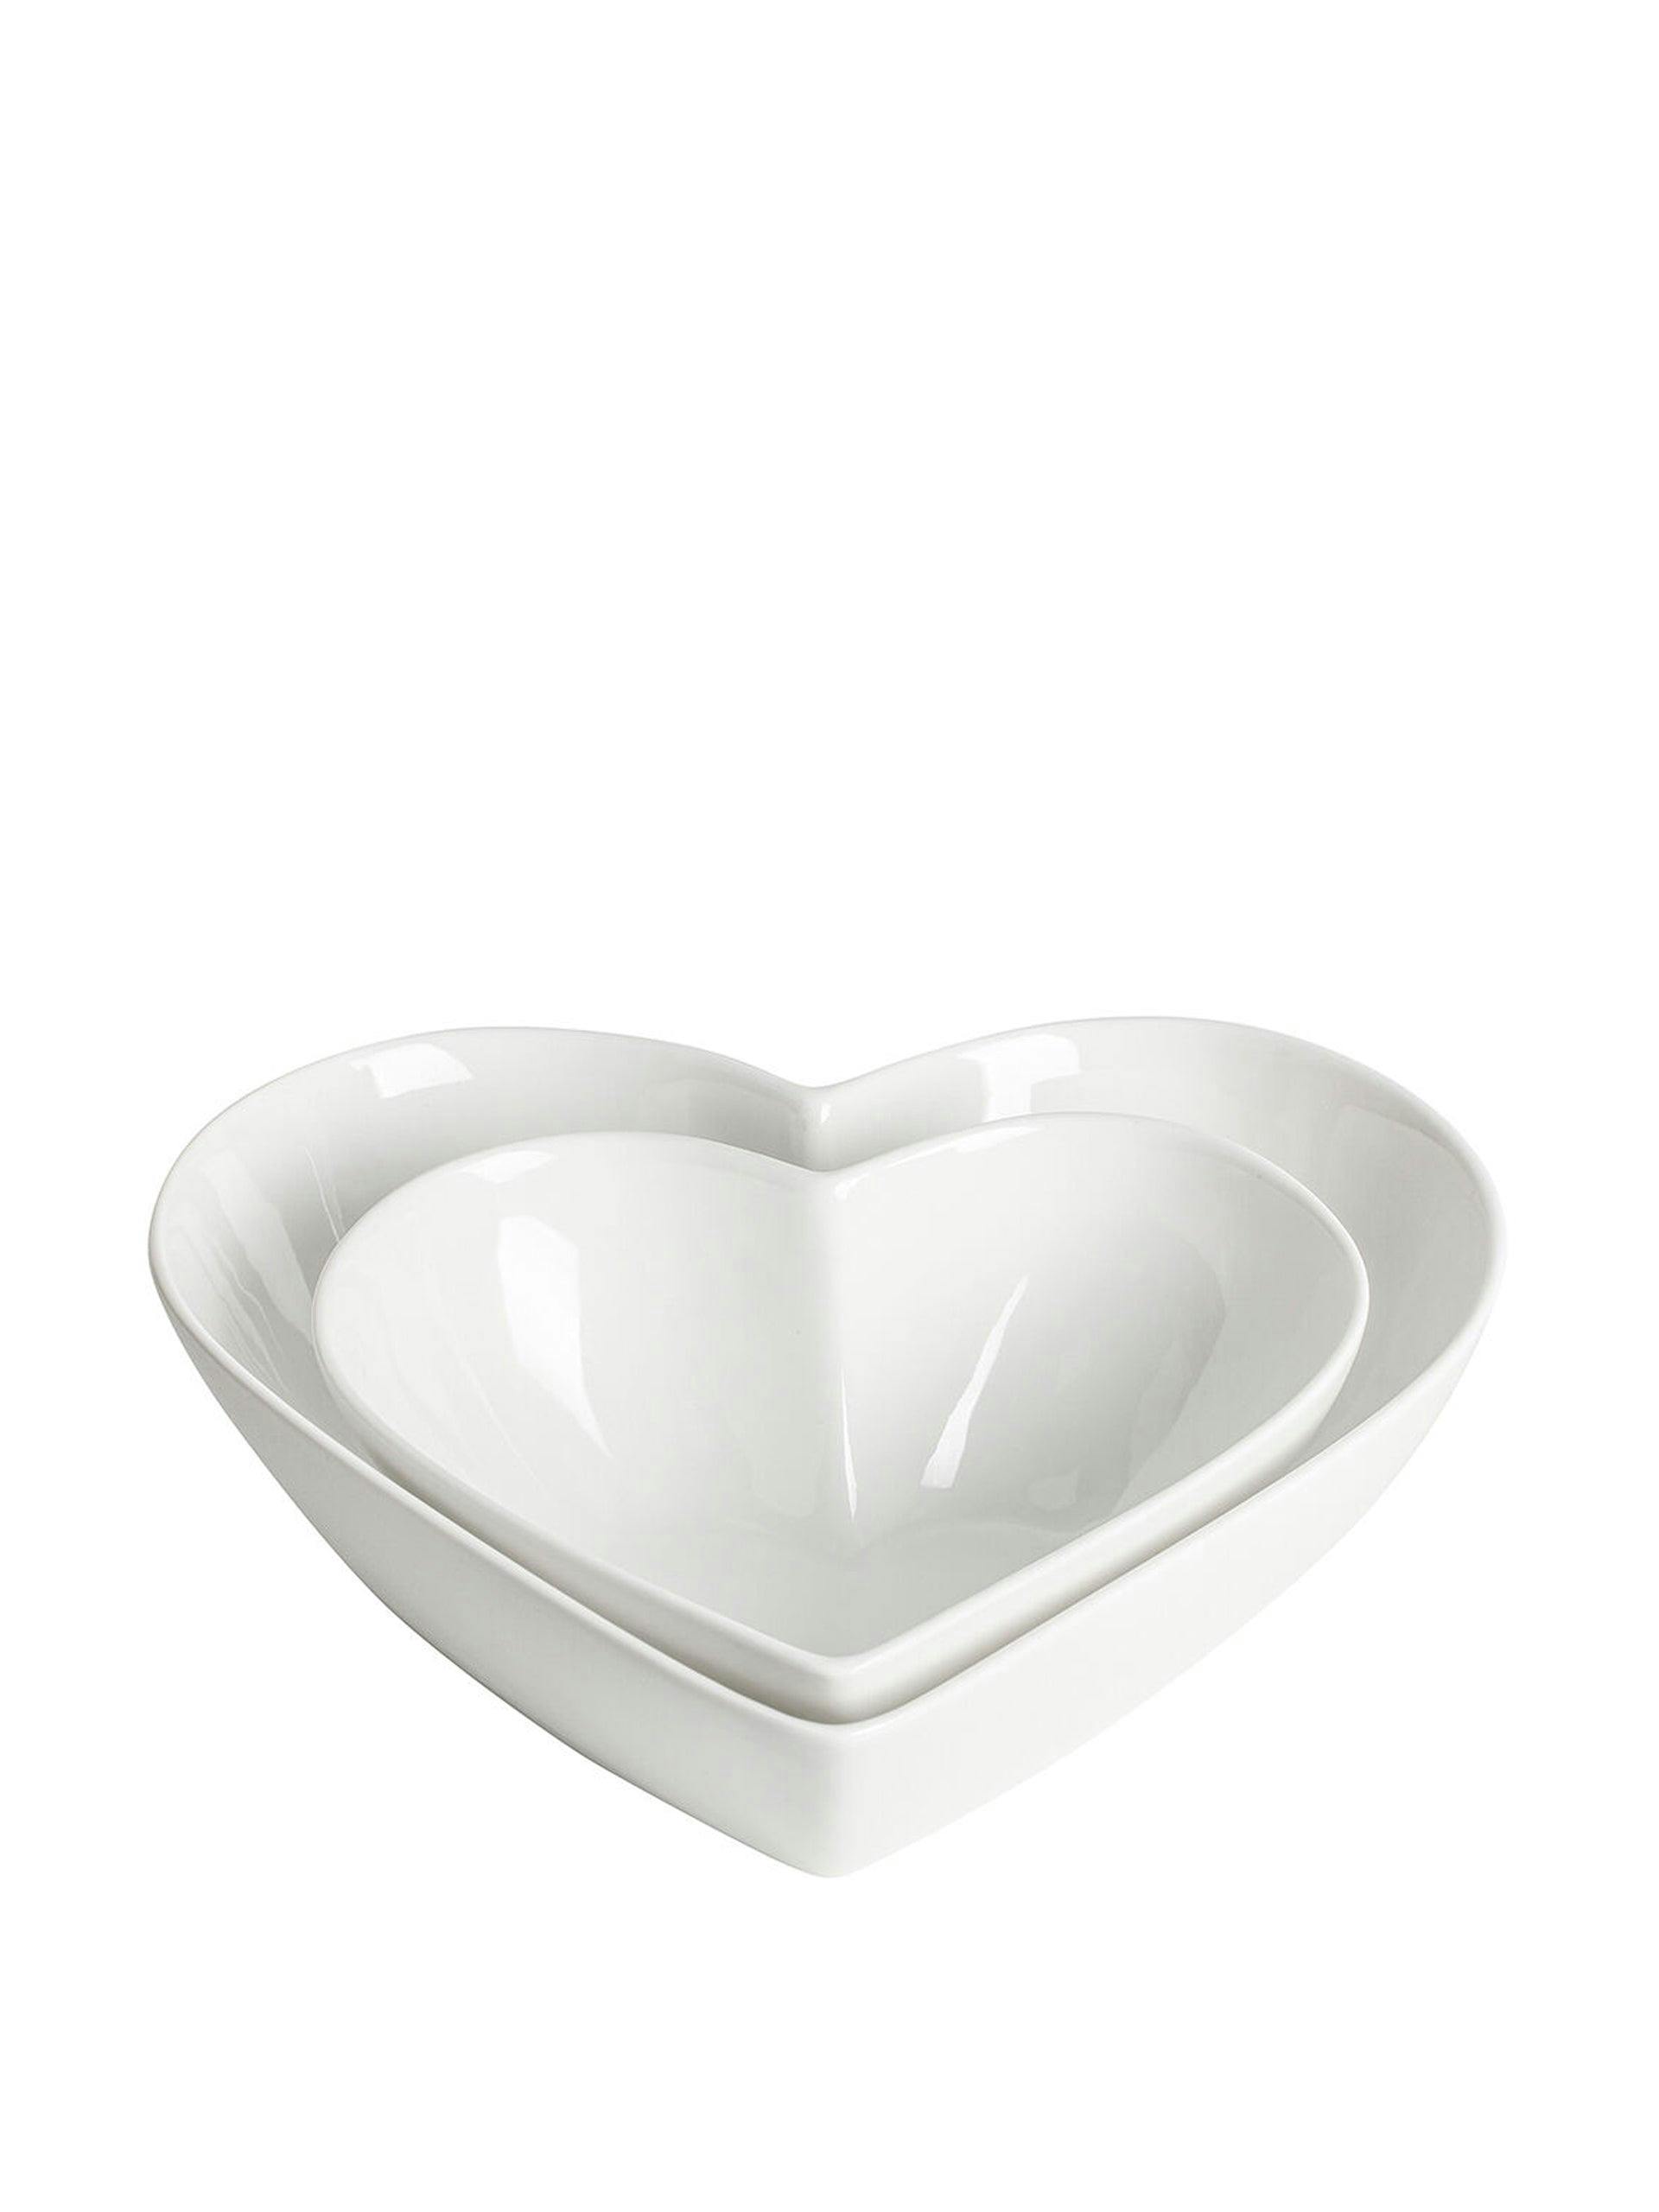 ProCook heart serving bowl set